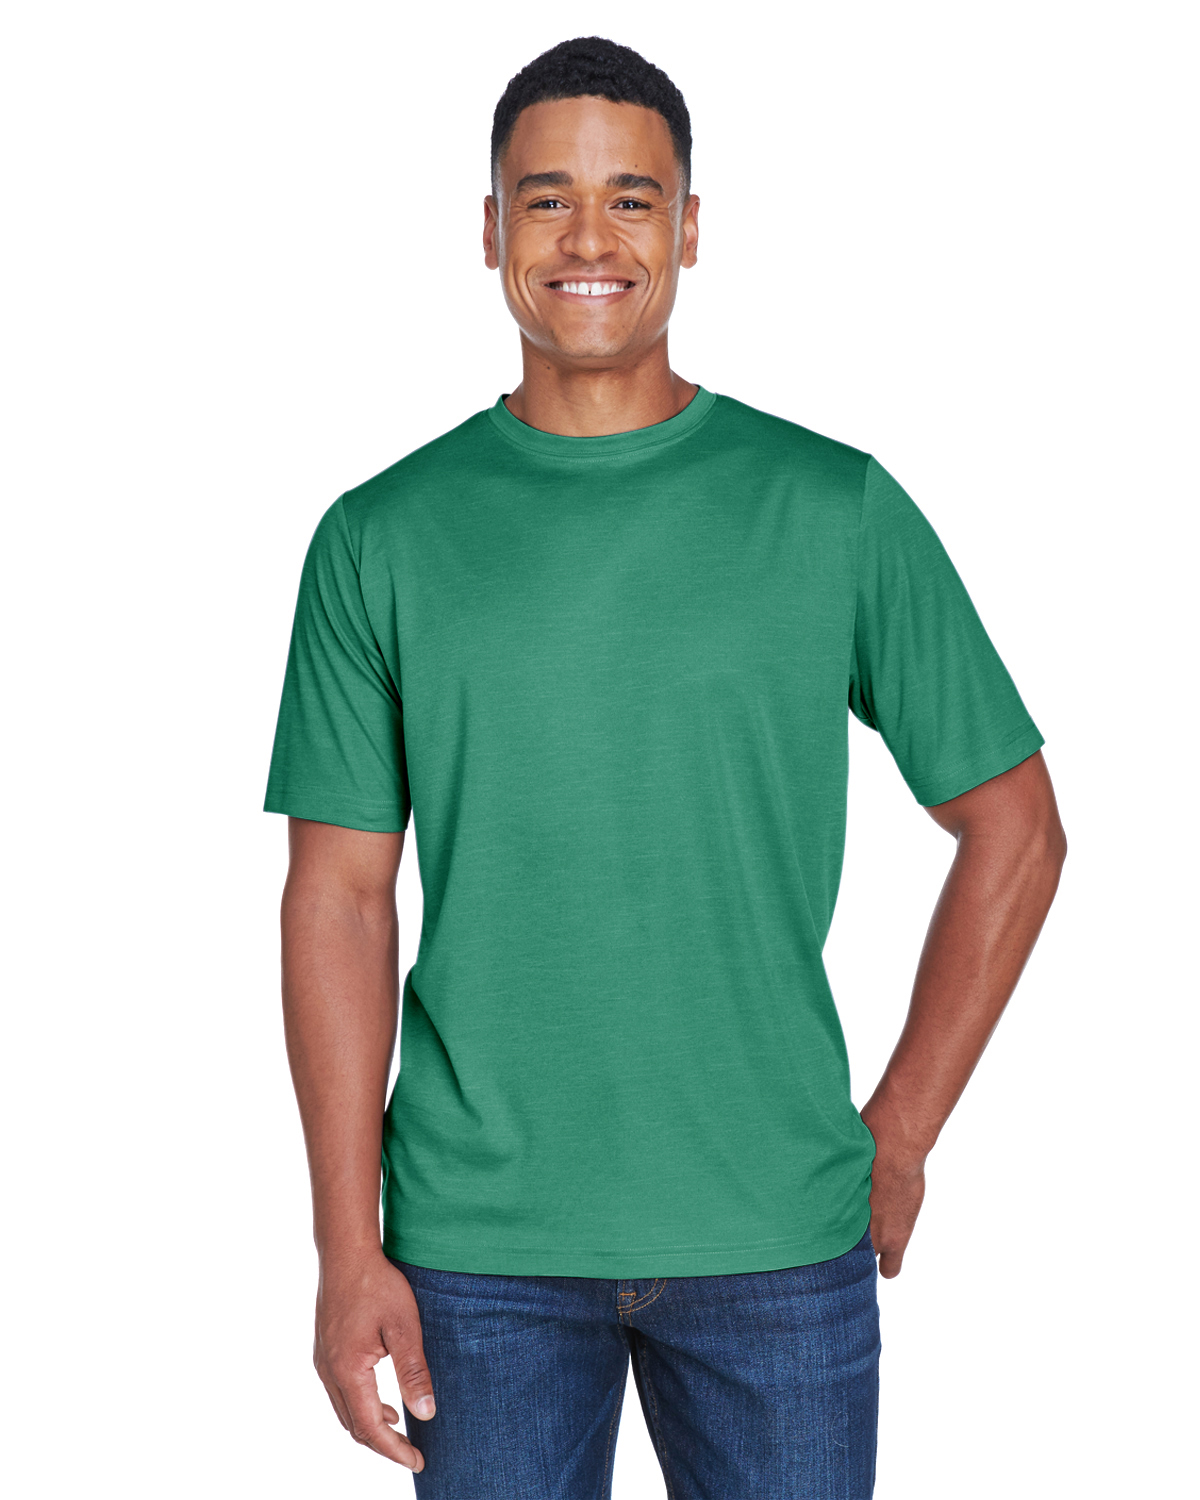 UltraClub 8420 - Men's Cool & Dry Sport Performance Interlock T-Shirt Forest Green - S